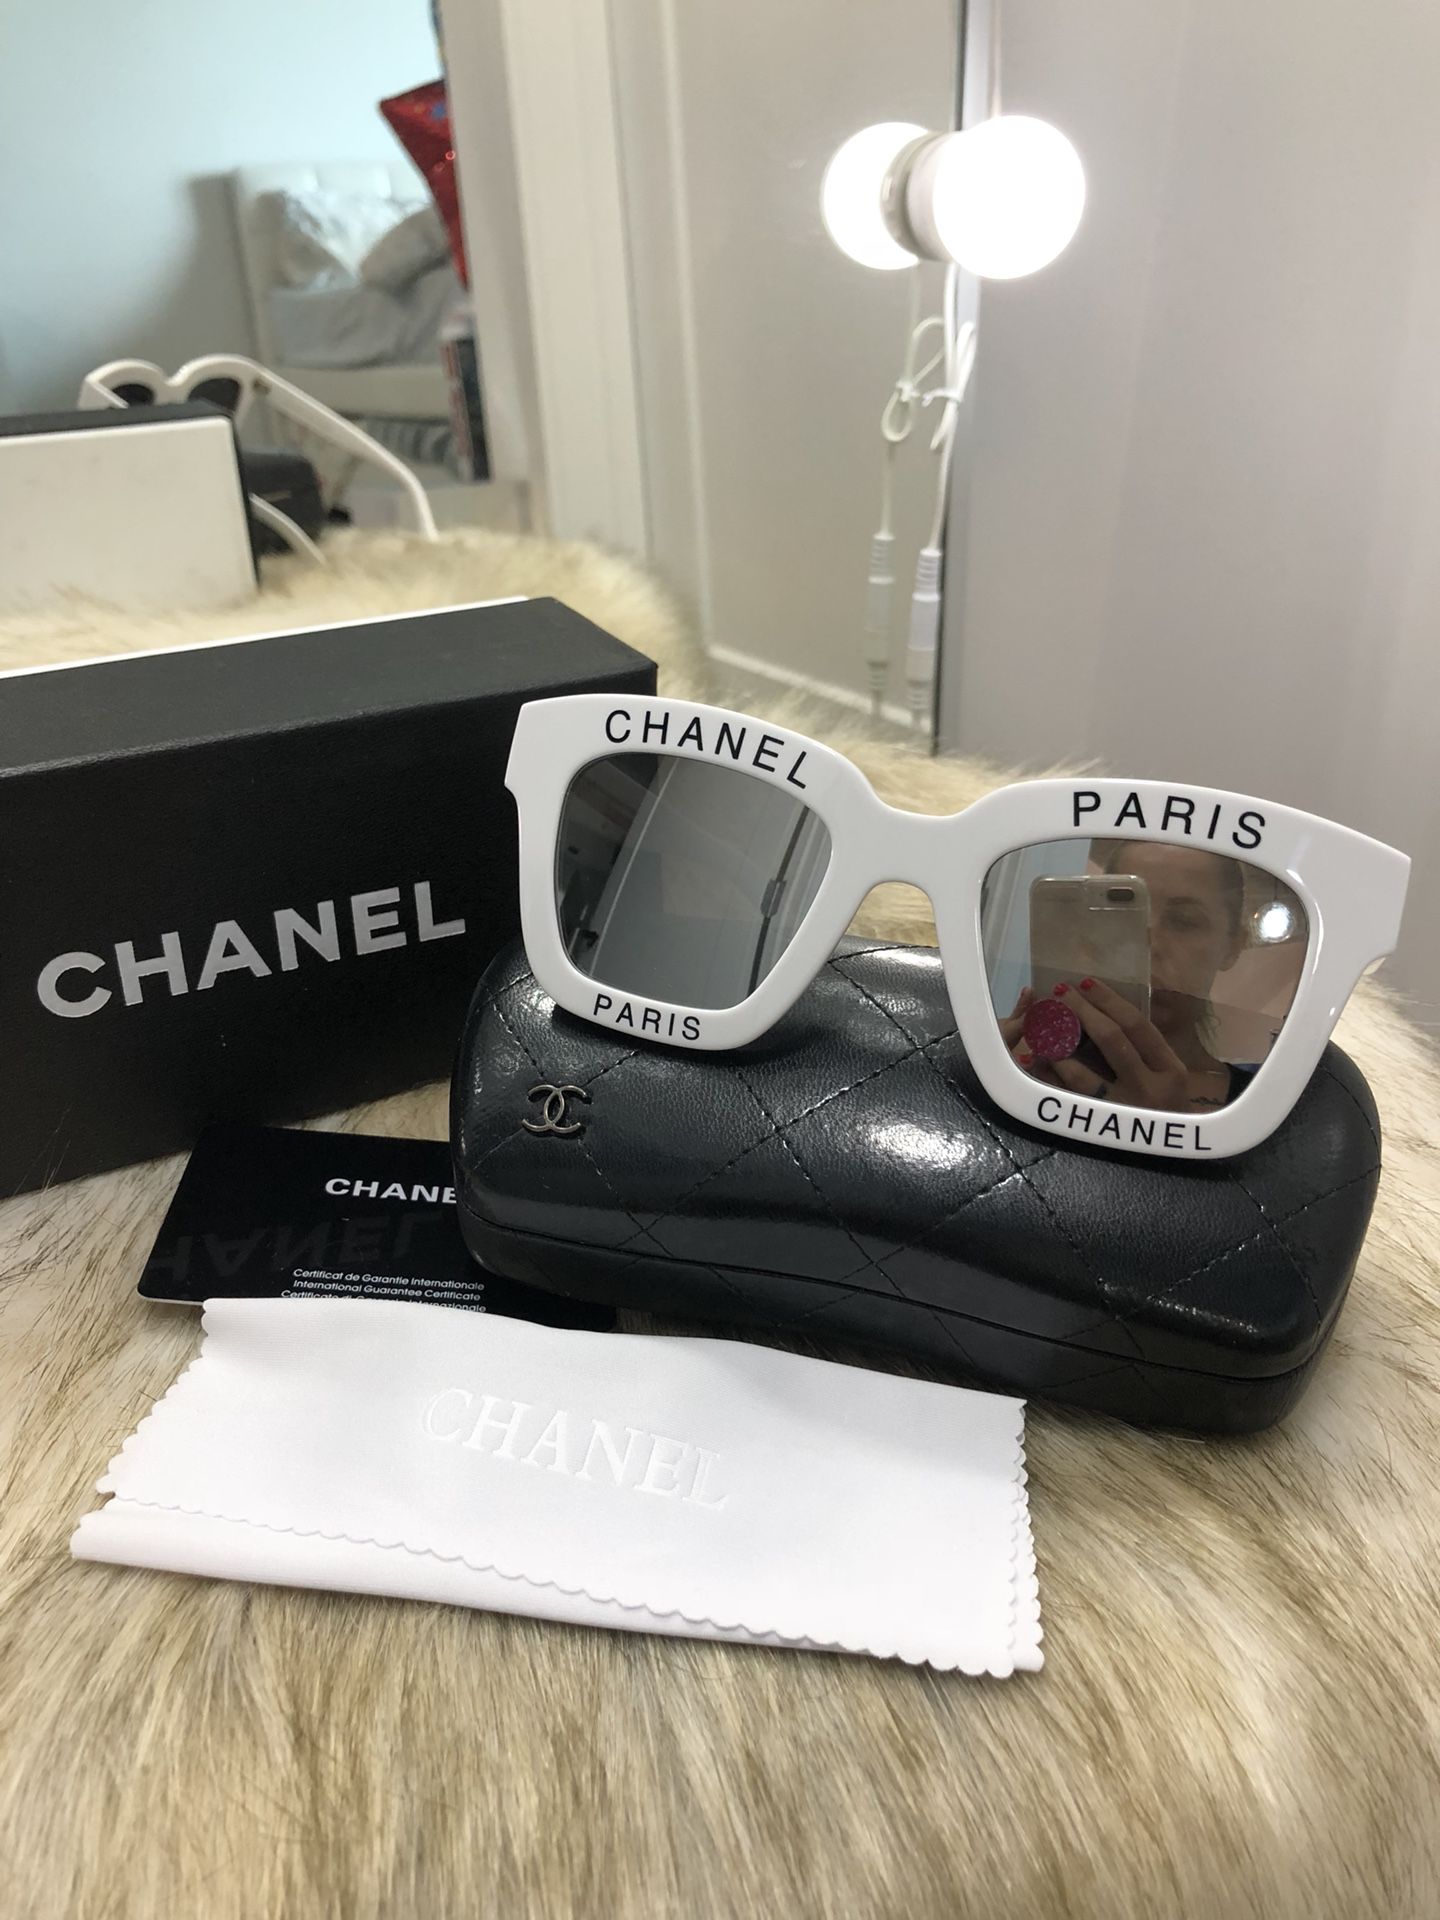 Chanel Last Trend 2018 Runway Sunglasses for Sale in Miami, FL - OfferUp